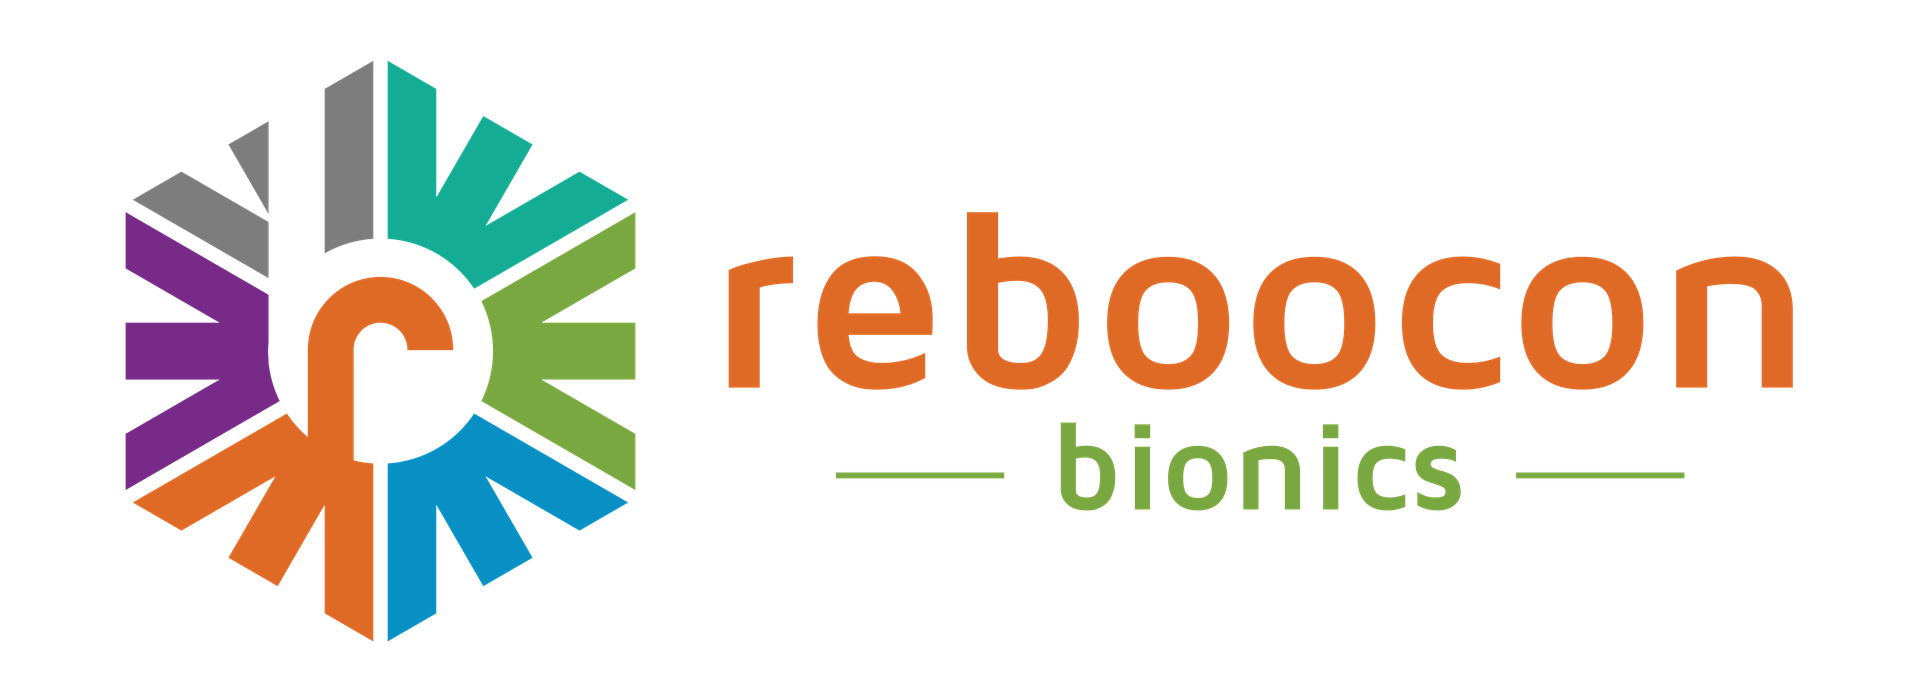 Reboocon Bionics